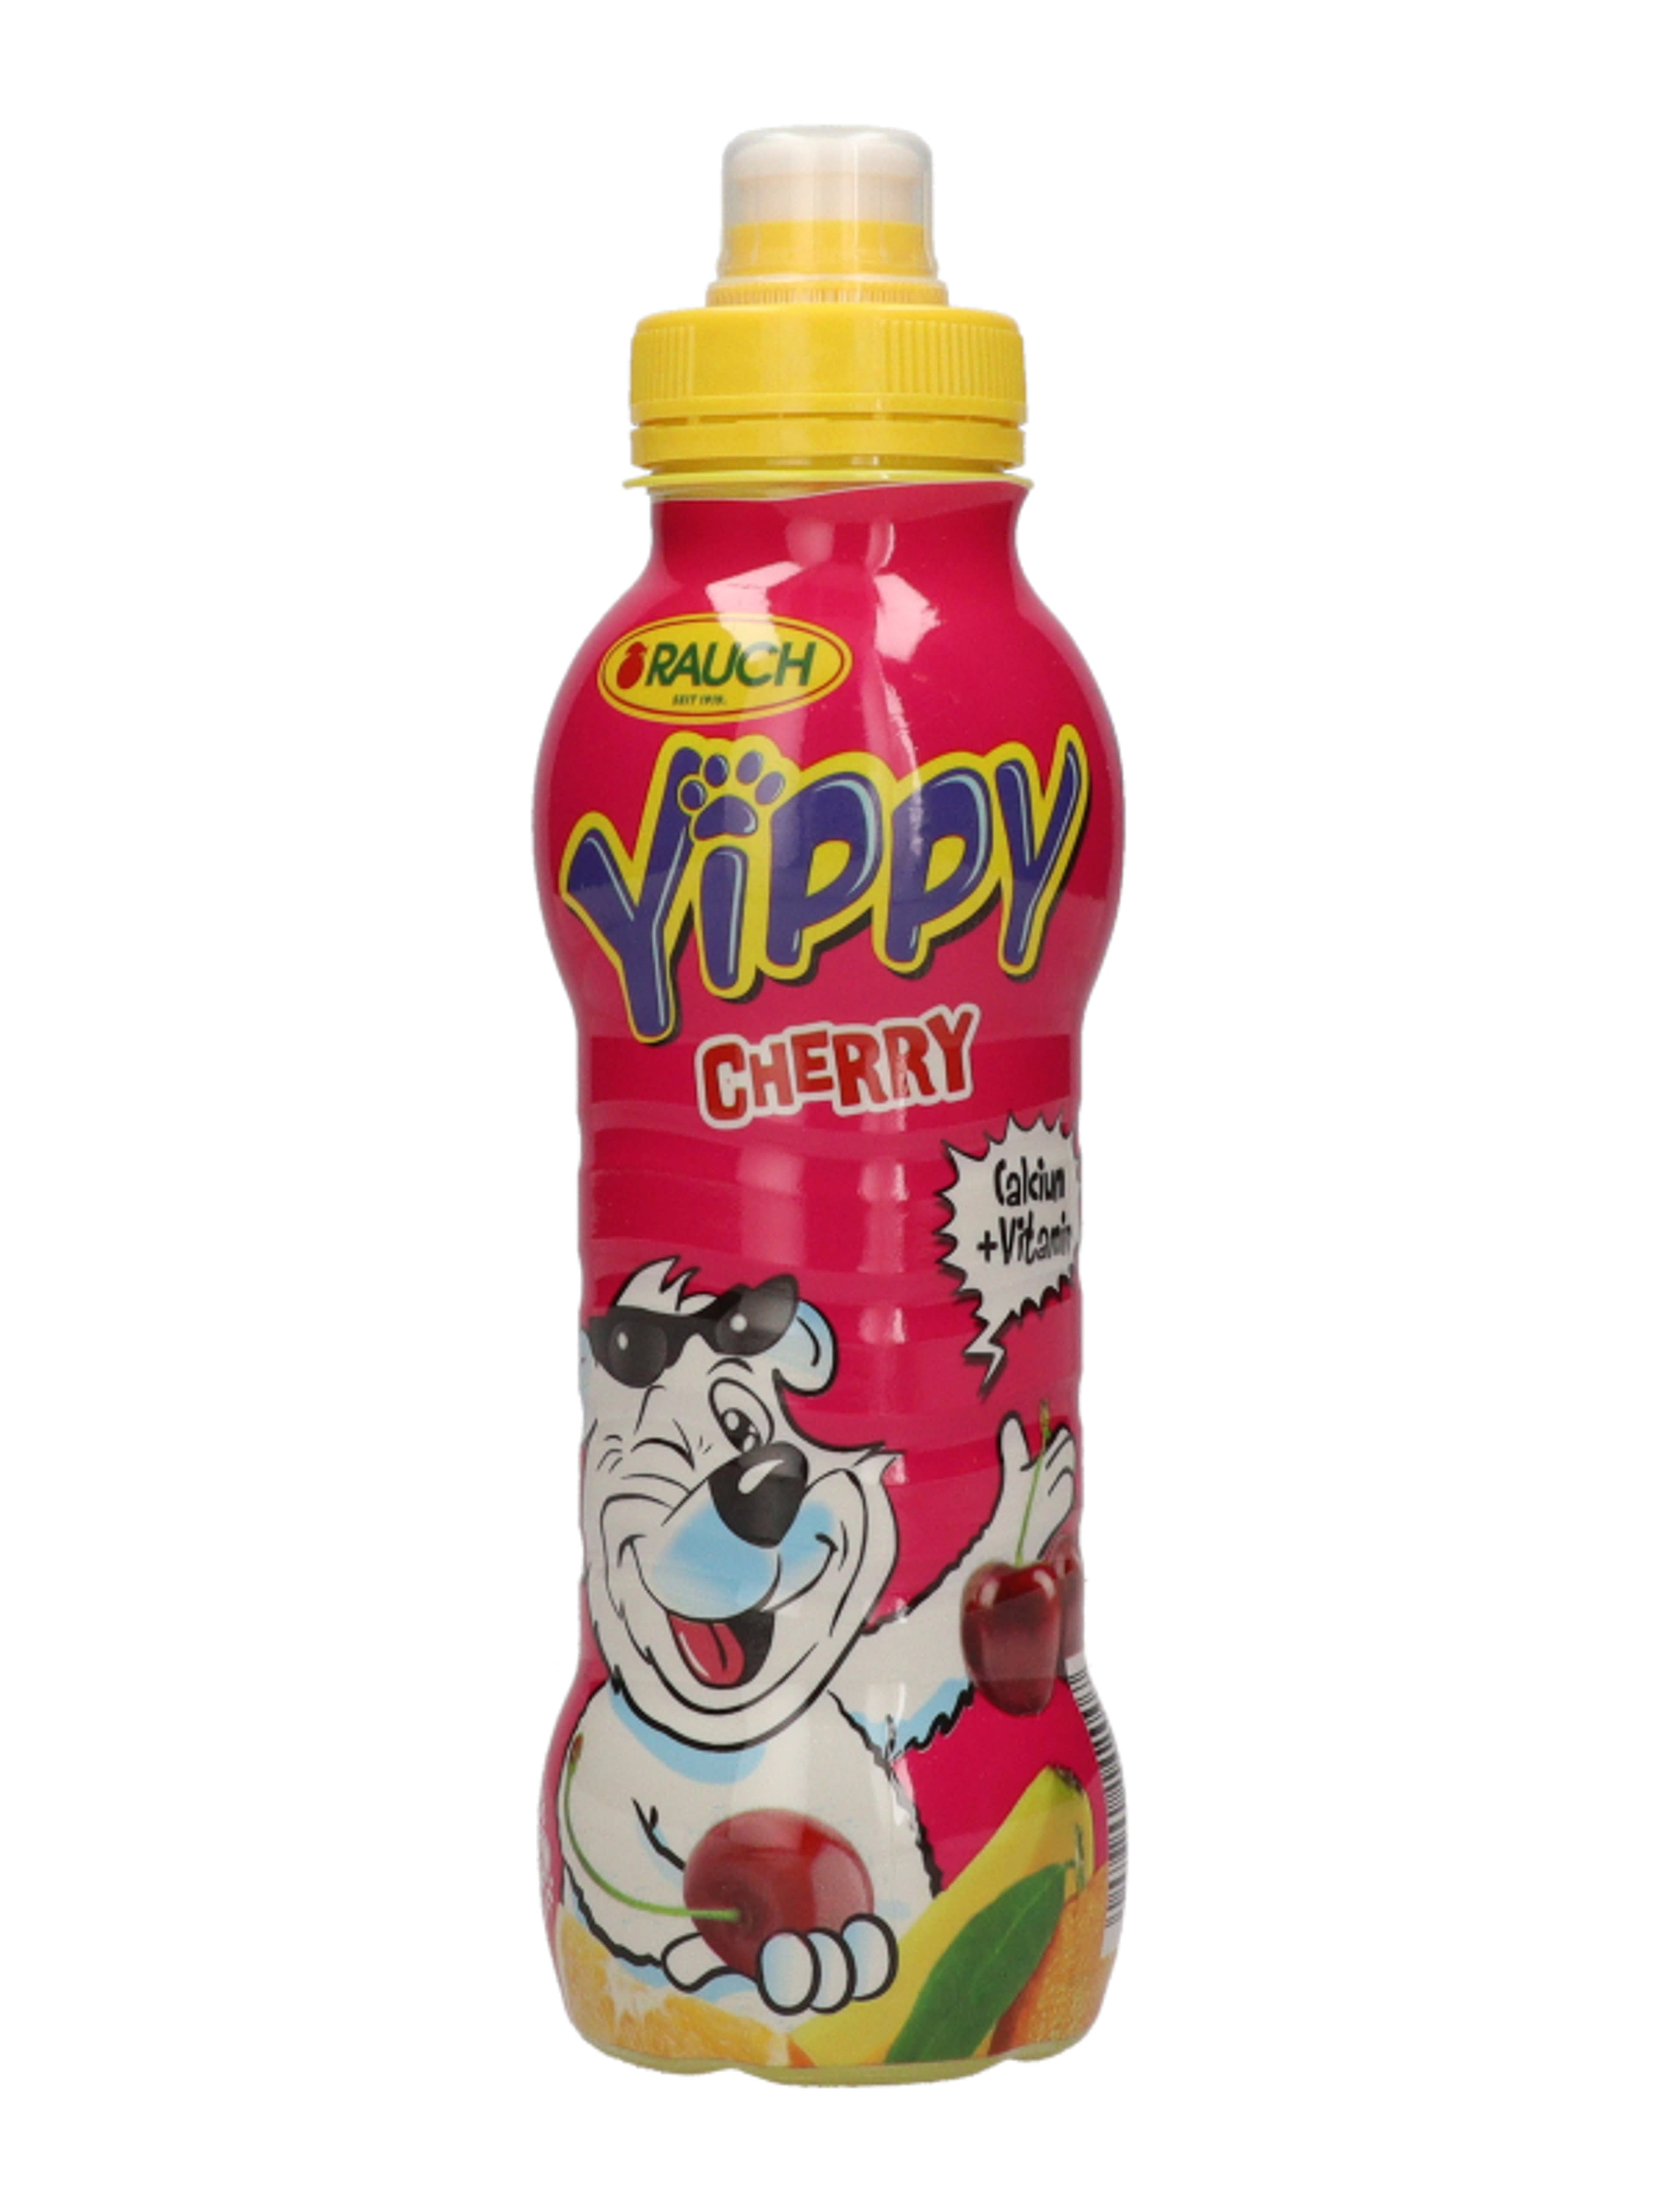 Yippy cherry pet - 330 ml-2